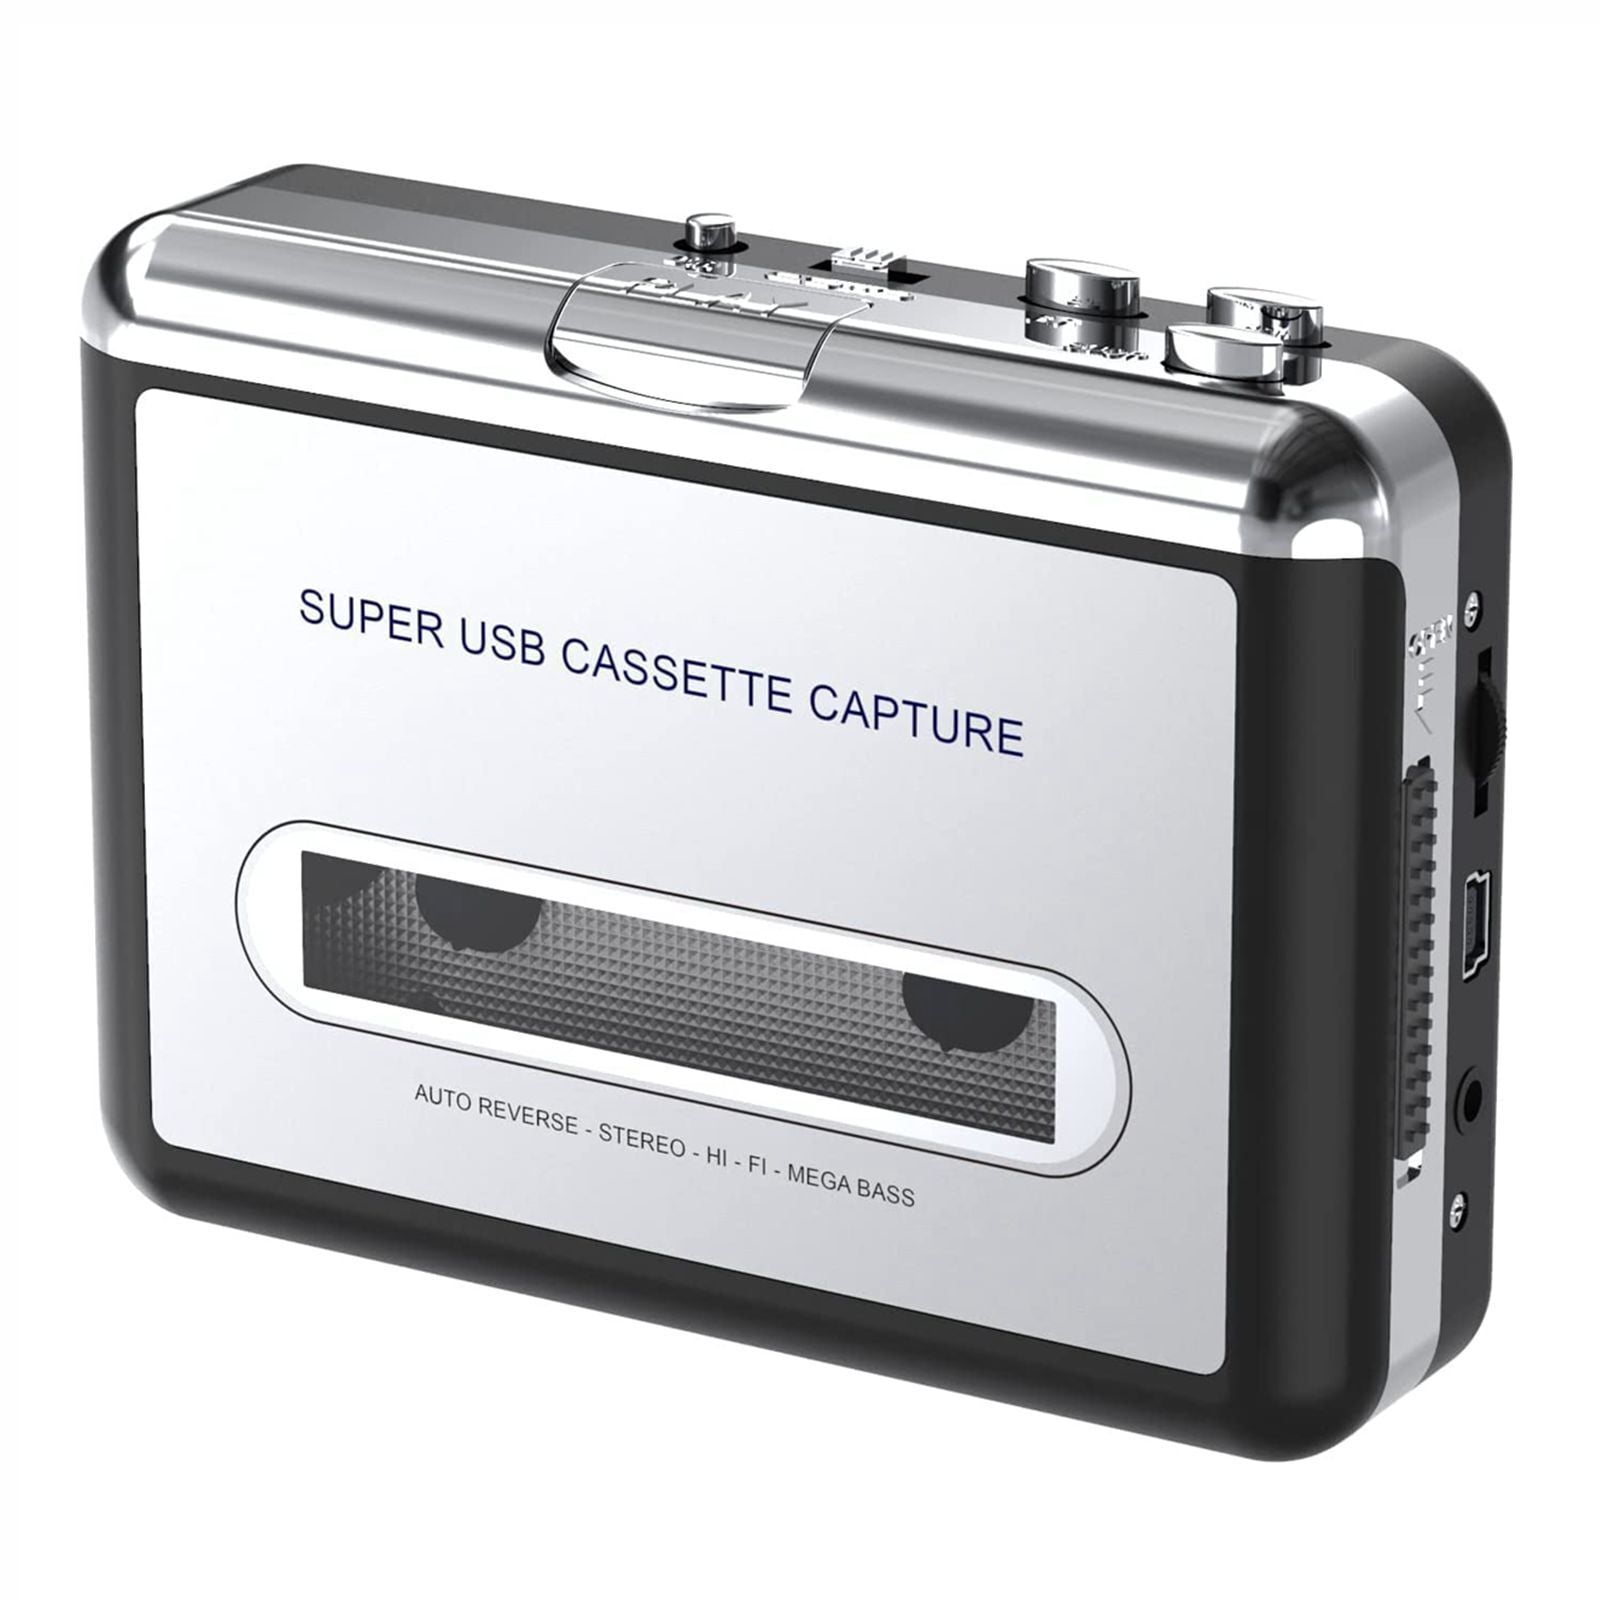  Philips 30-Minute Mini Cassette Tape - 10 Pack